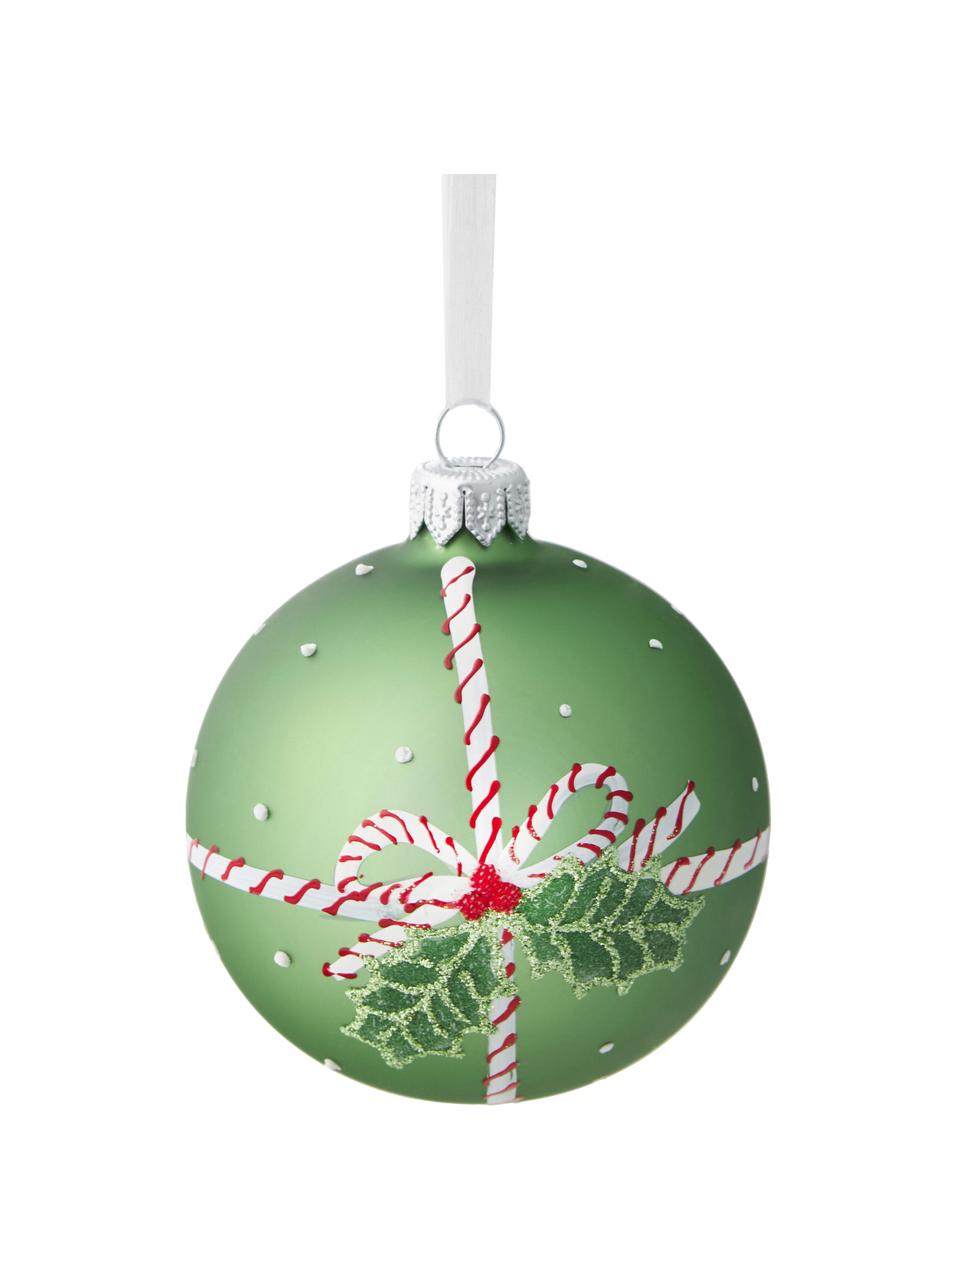 Set de bolas de Navidad sopladas artesanalmente Mistel, 6 uds., Vidrio, Rojo, verde, blanco, Ø 8 cm